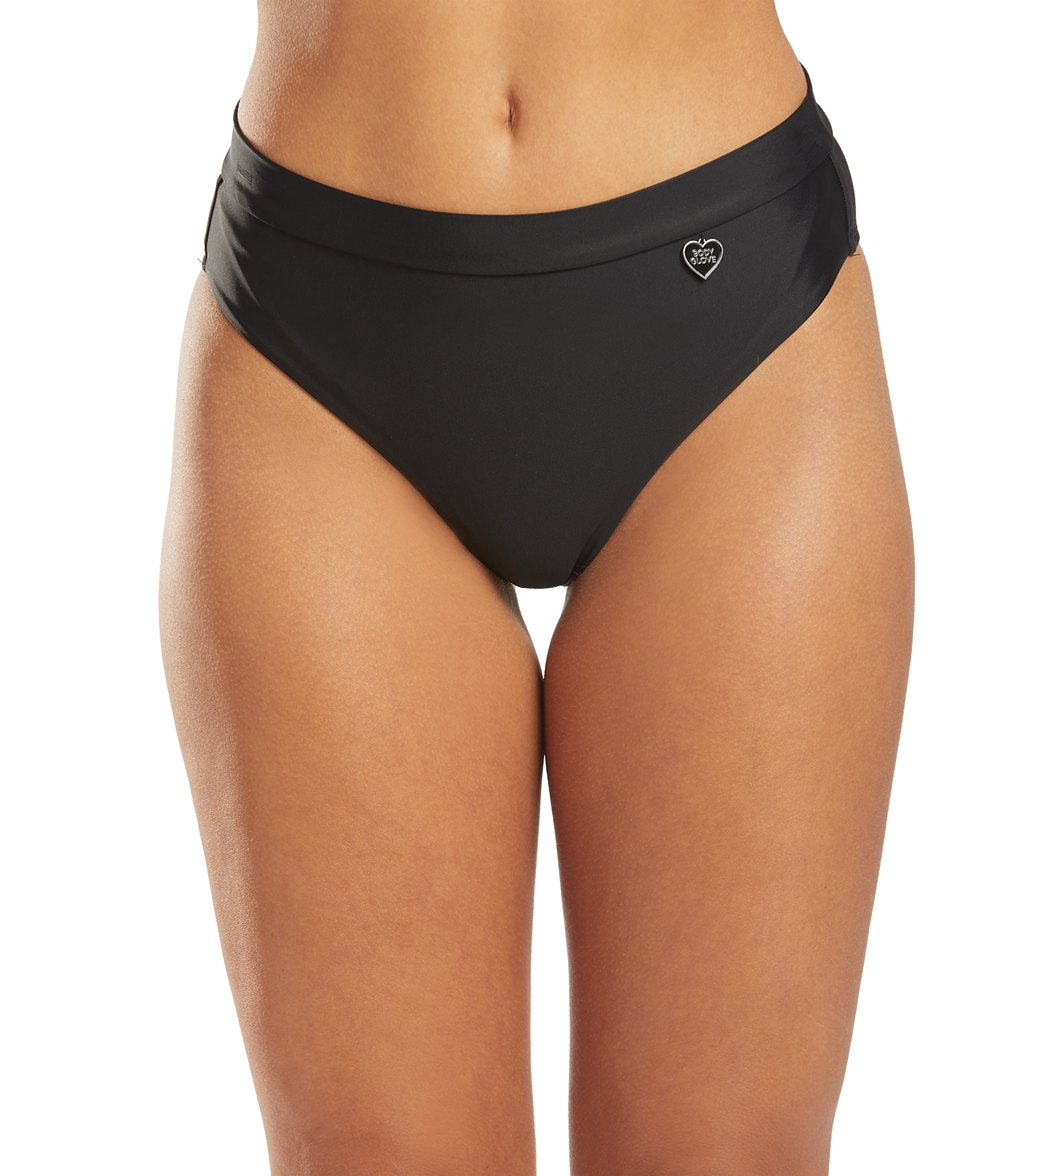 Body Glove Smoothies Marlee Bikini Bottom - Black Small - Swimoutlet.com